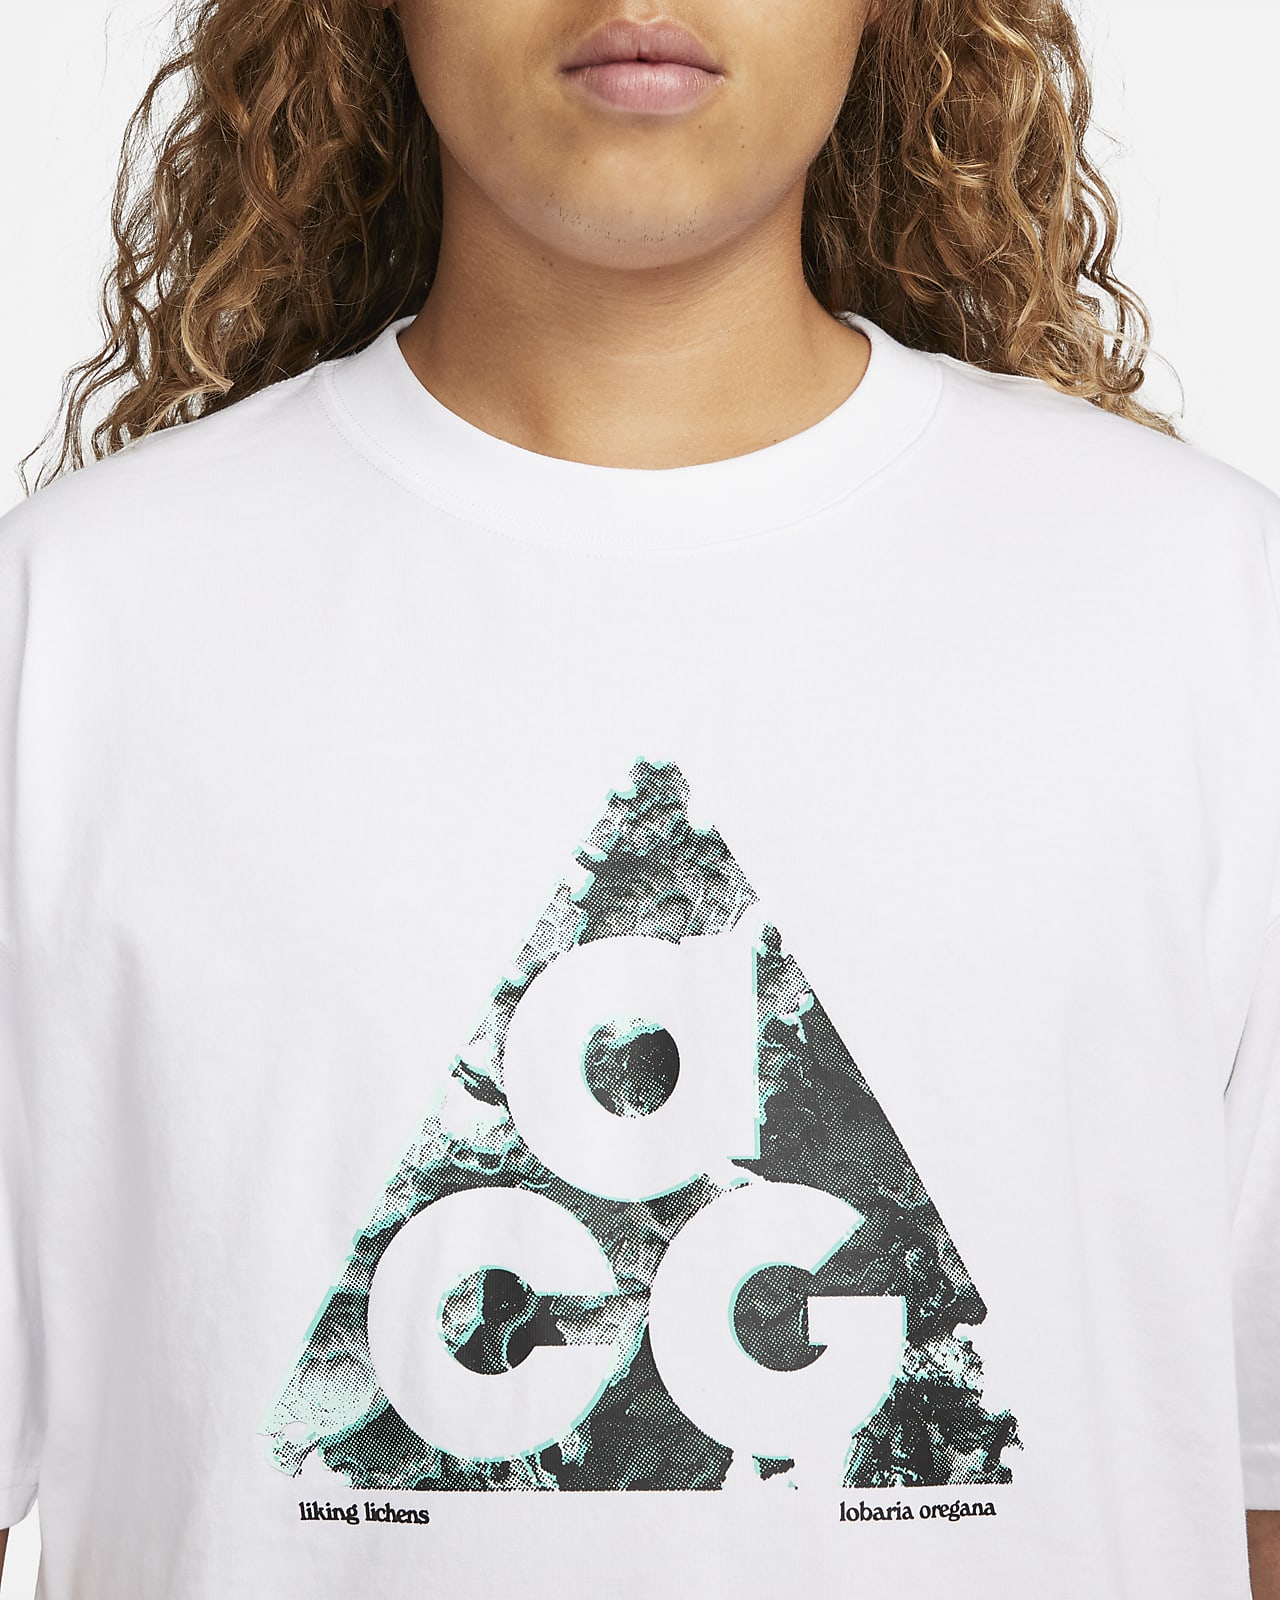 Tee-shirt Nike ACG pour Homme. Nike LU